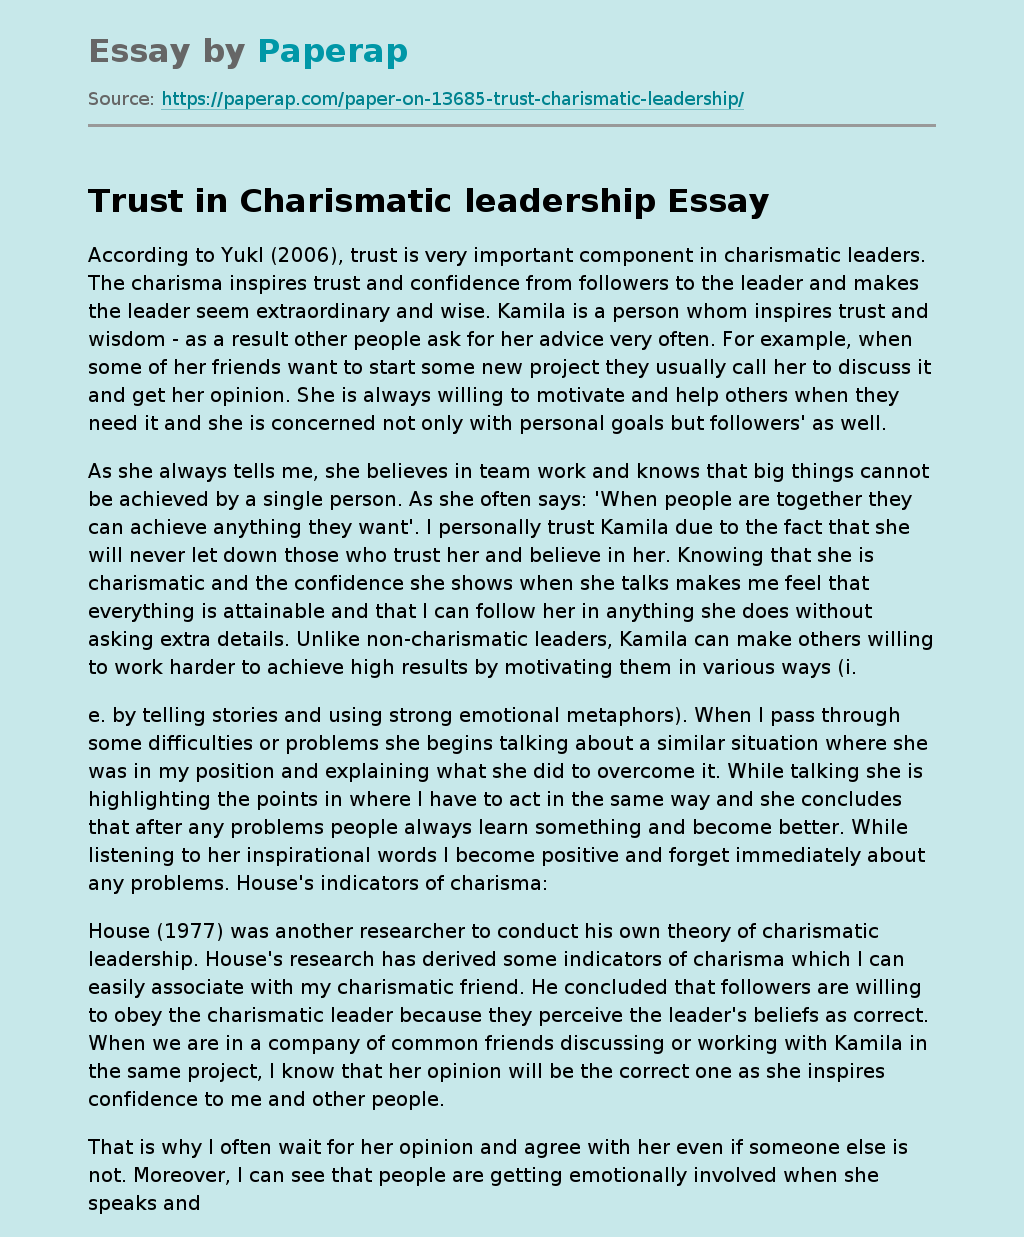 Trust in Charismatic Leadership